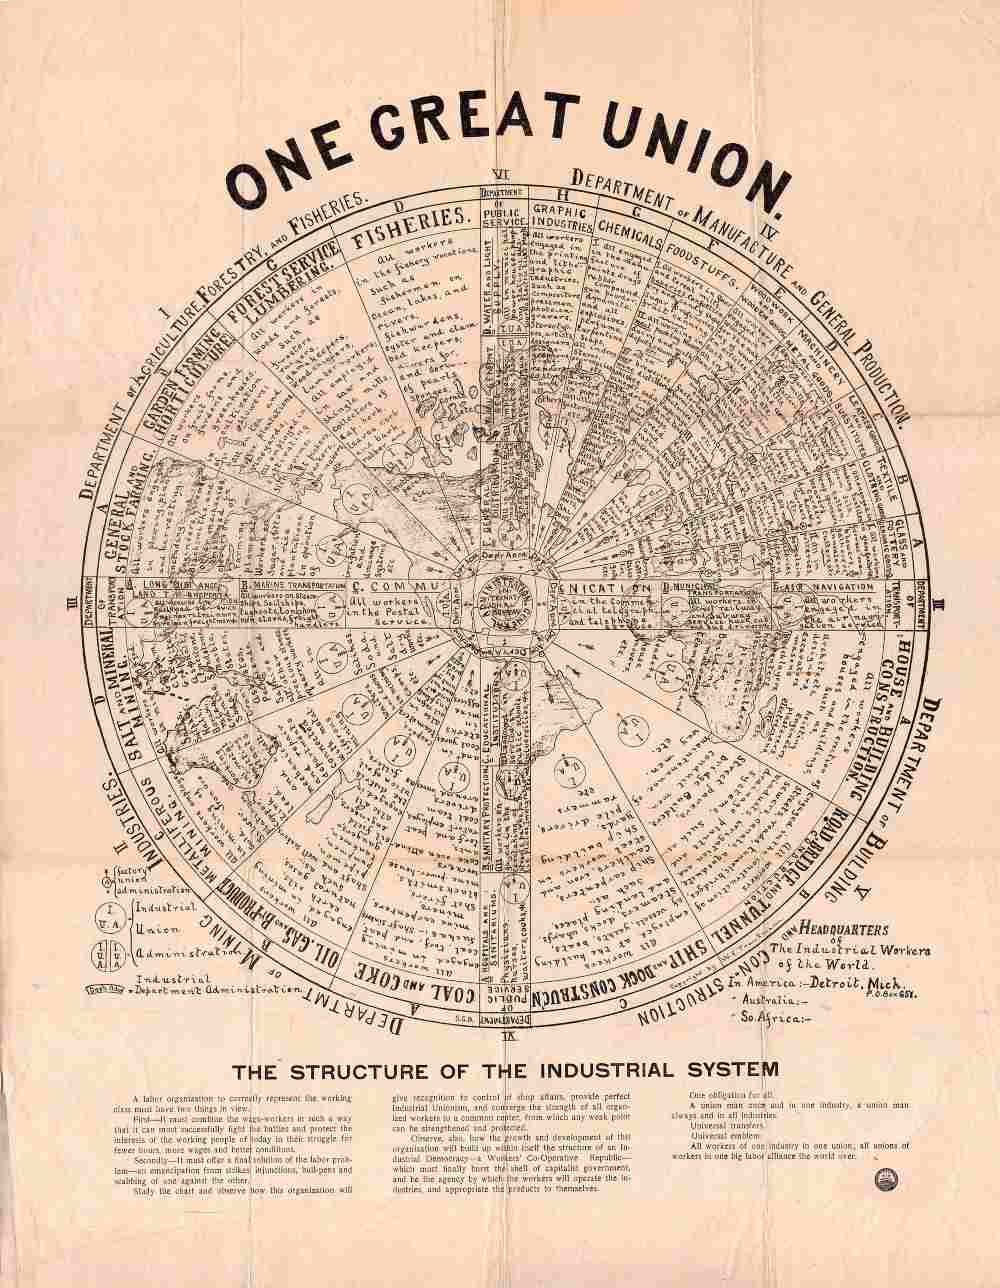 One Big Union, 1919